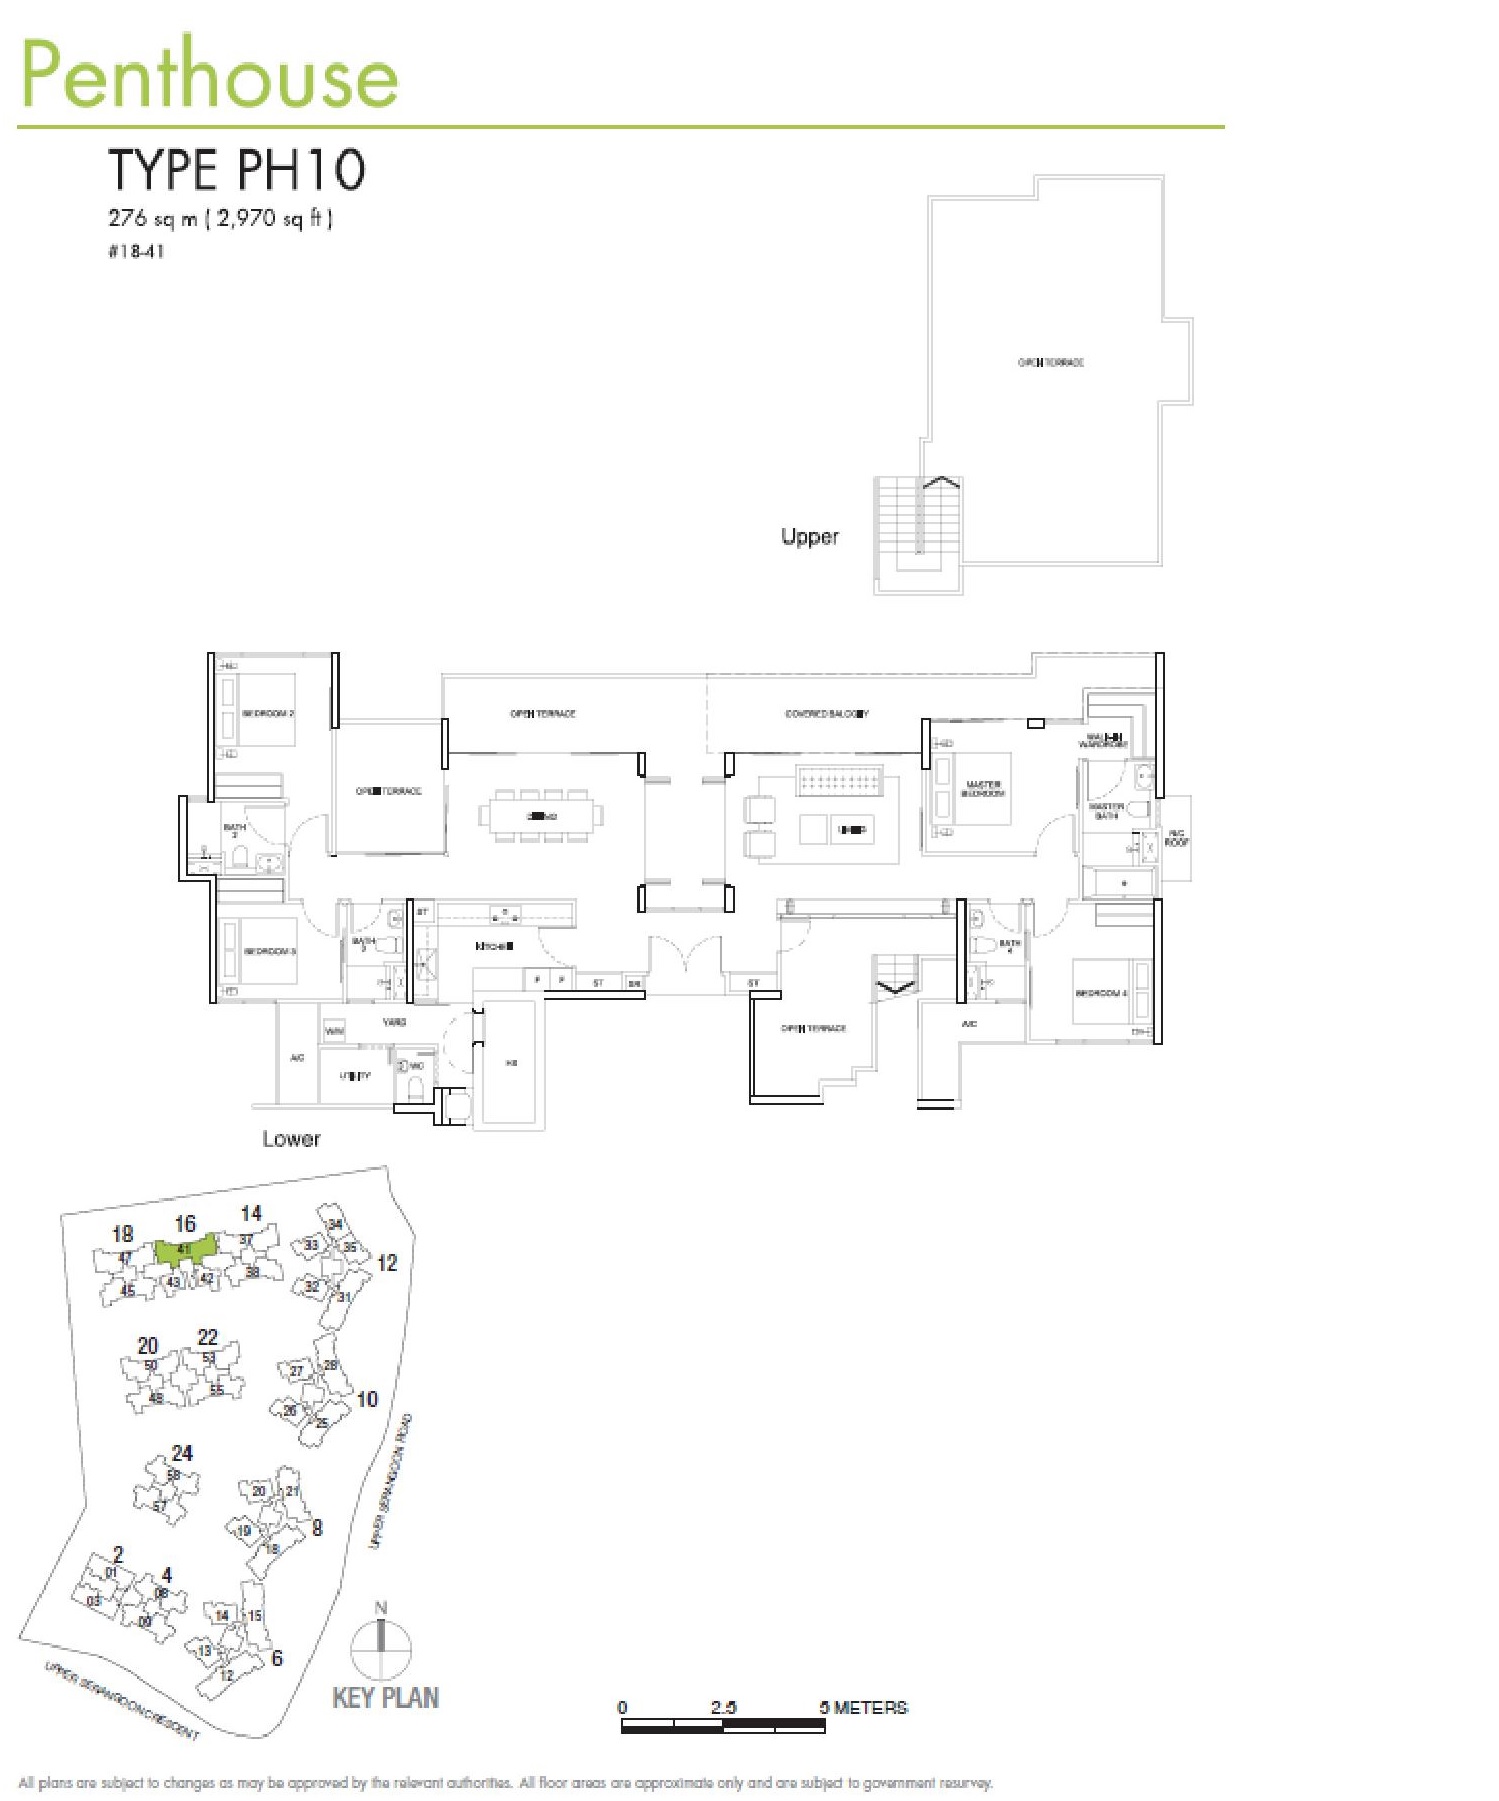 RiverSails 4 Bedroom Penthouse Type PH10 Floor Plans